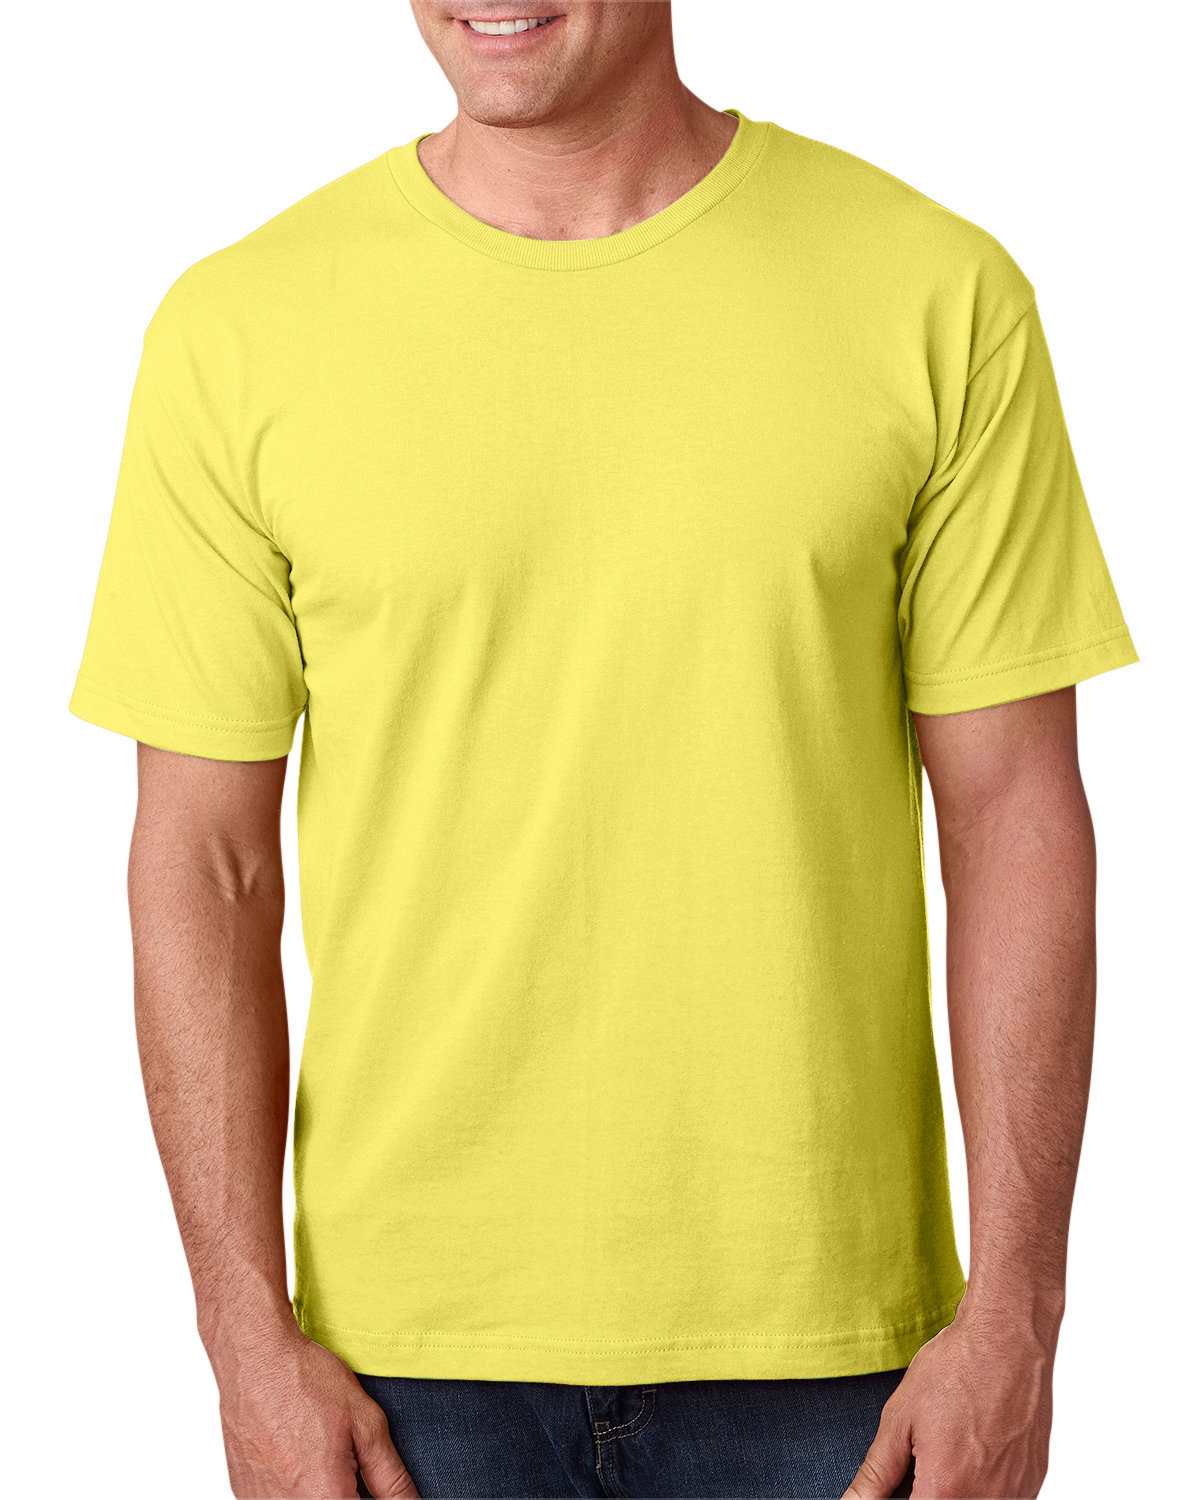 Bayside Adult 5.4 oz., 100% Cotton T-Shirt YELLOW 